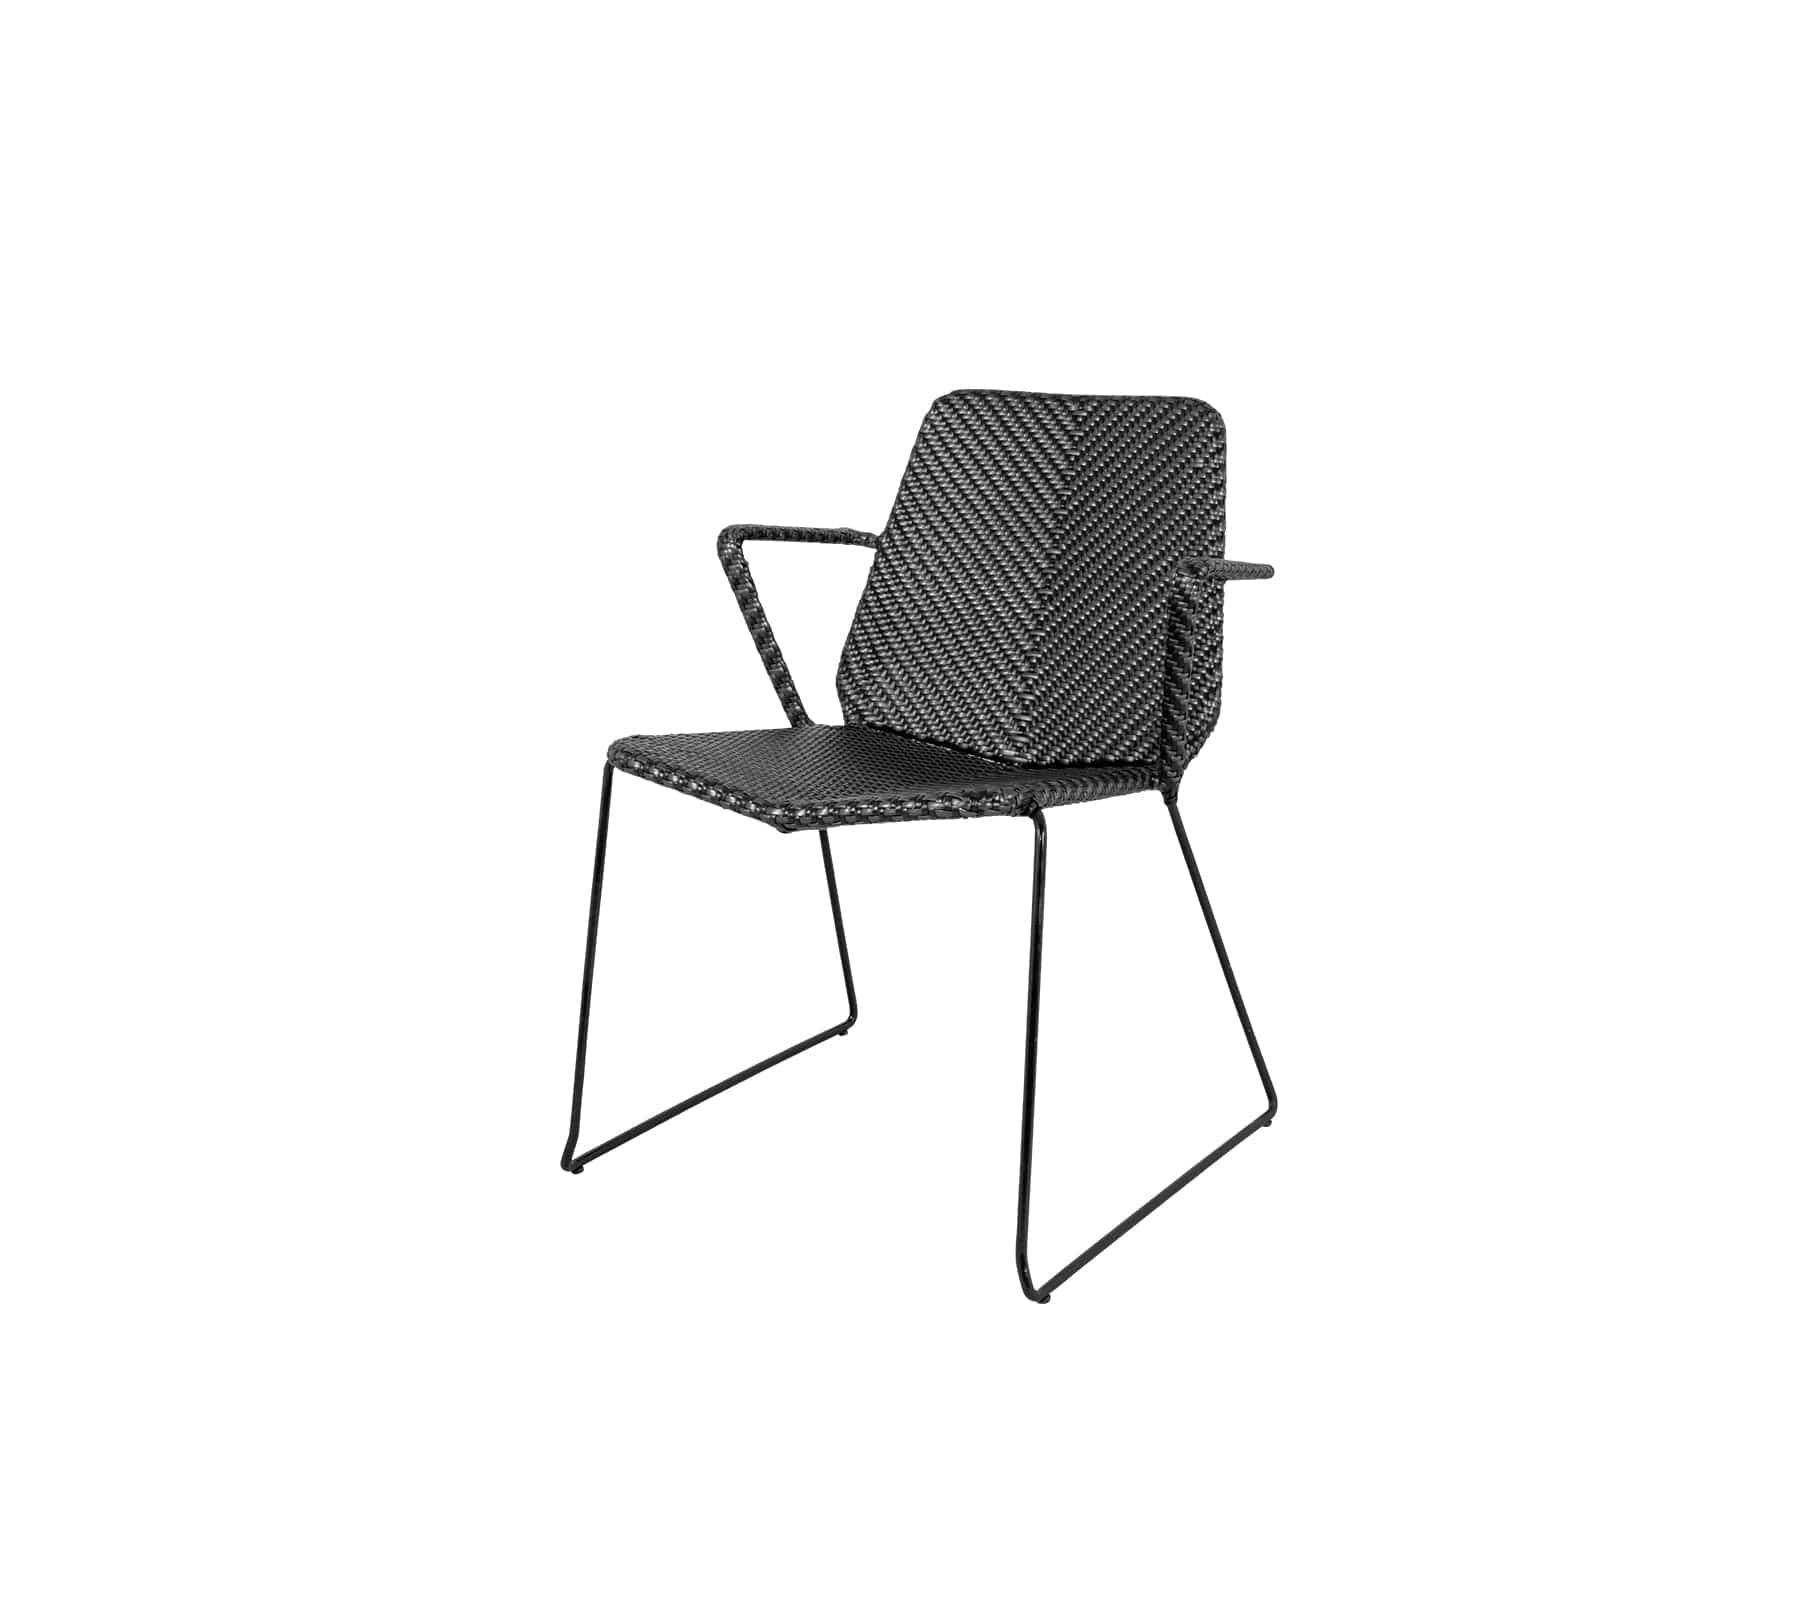 Cane-Line Denmark Cane-line Weave -  Black/Graphite / Dark grey  -  Cane-line Wove Vision armchair, stackable (5403)